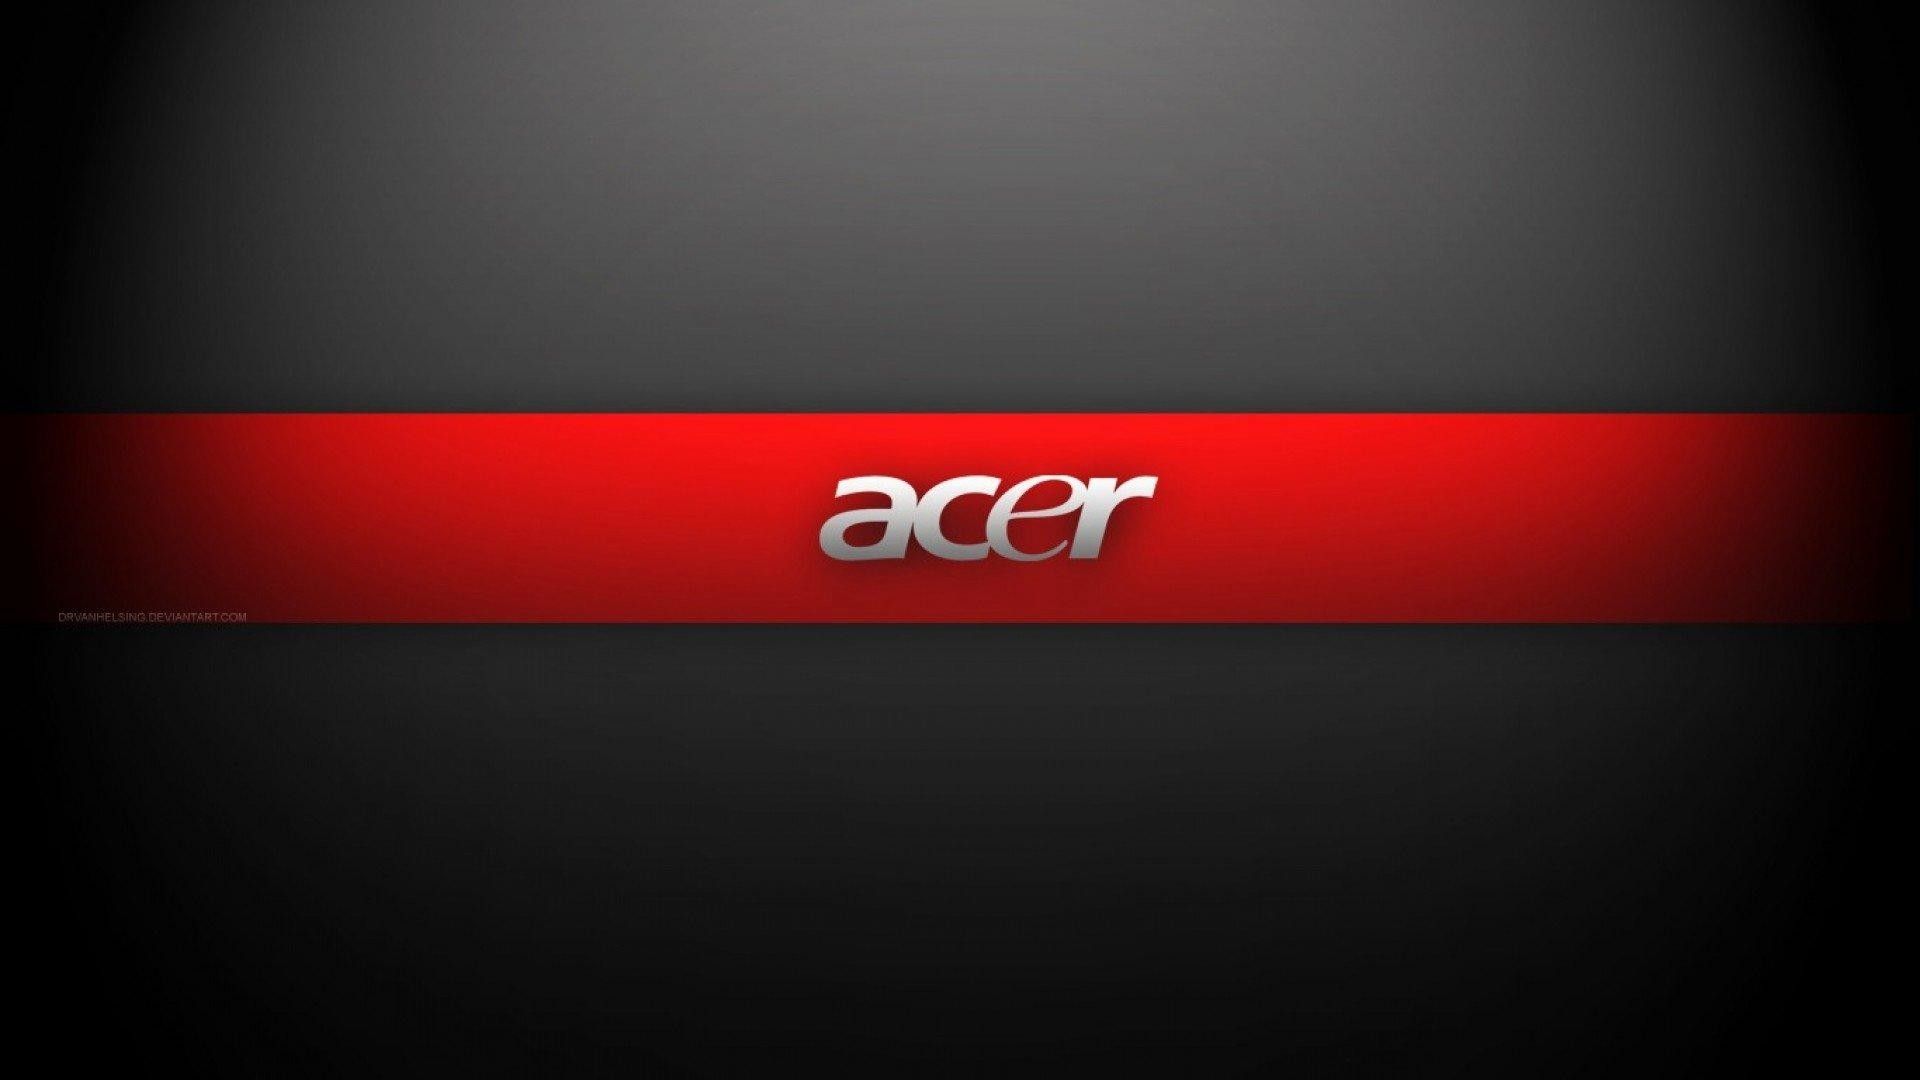 RGB Acer Wallpaper [4K] –